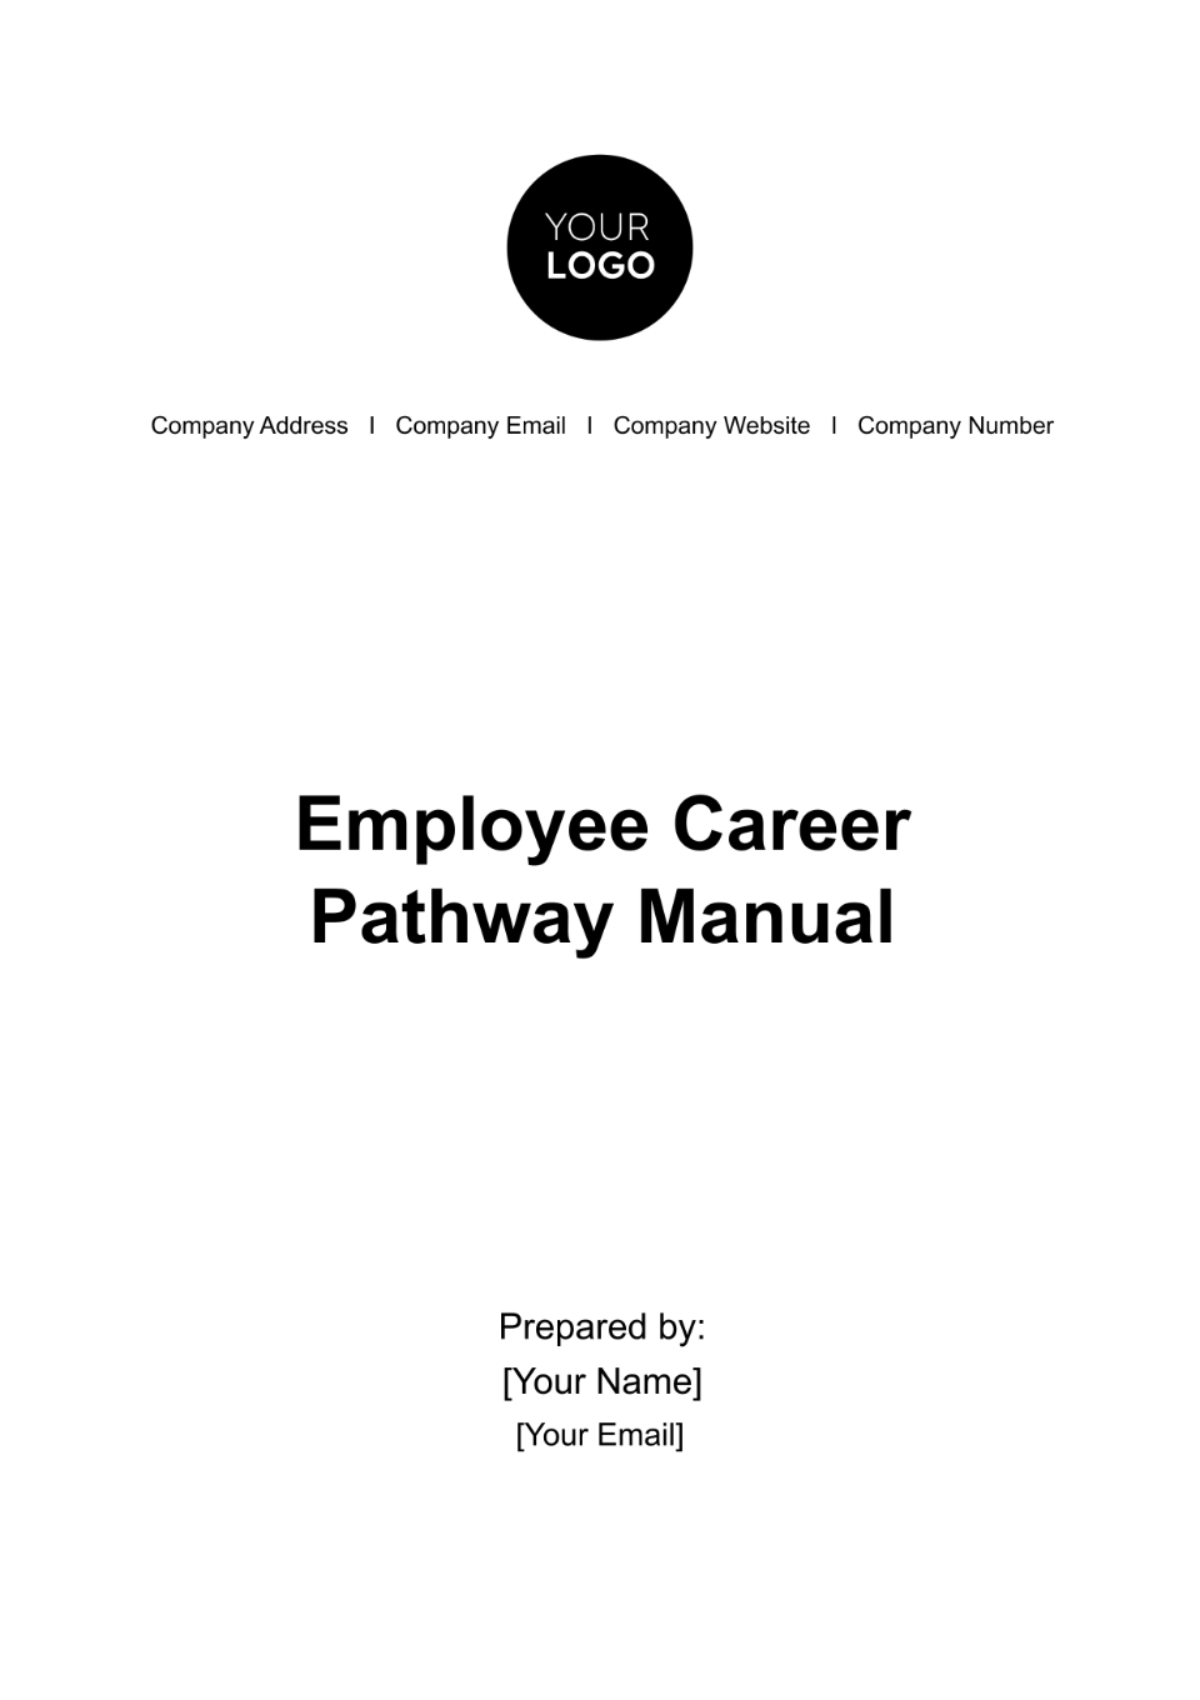 Free Employee Career Pathway Manual Template